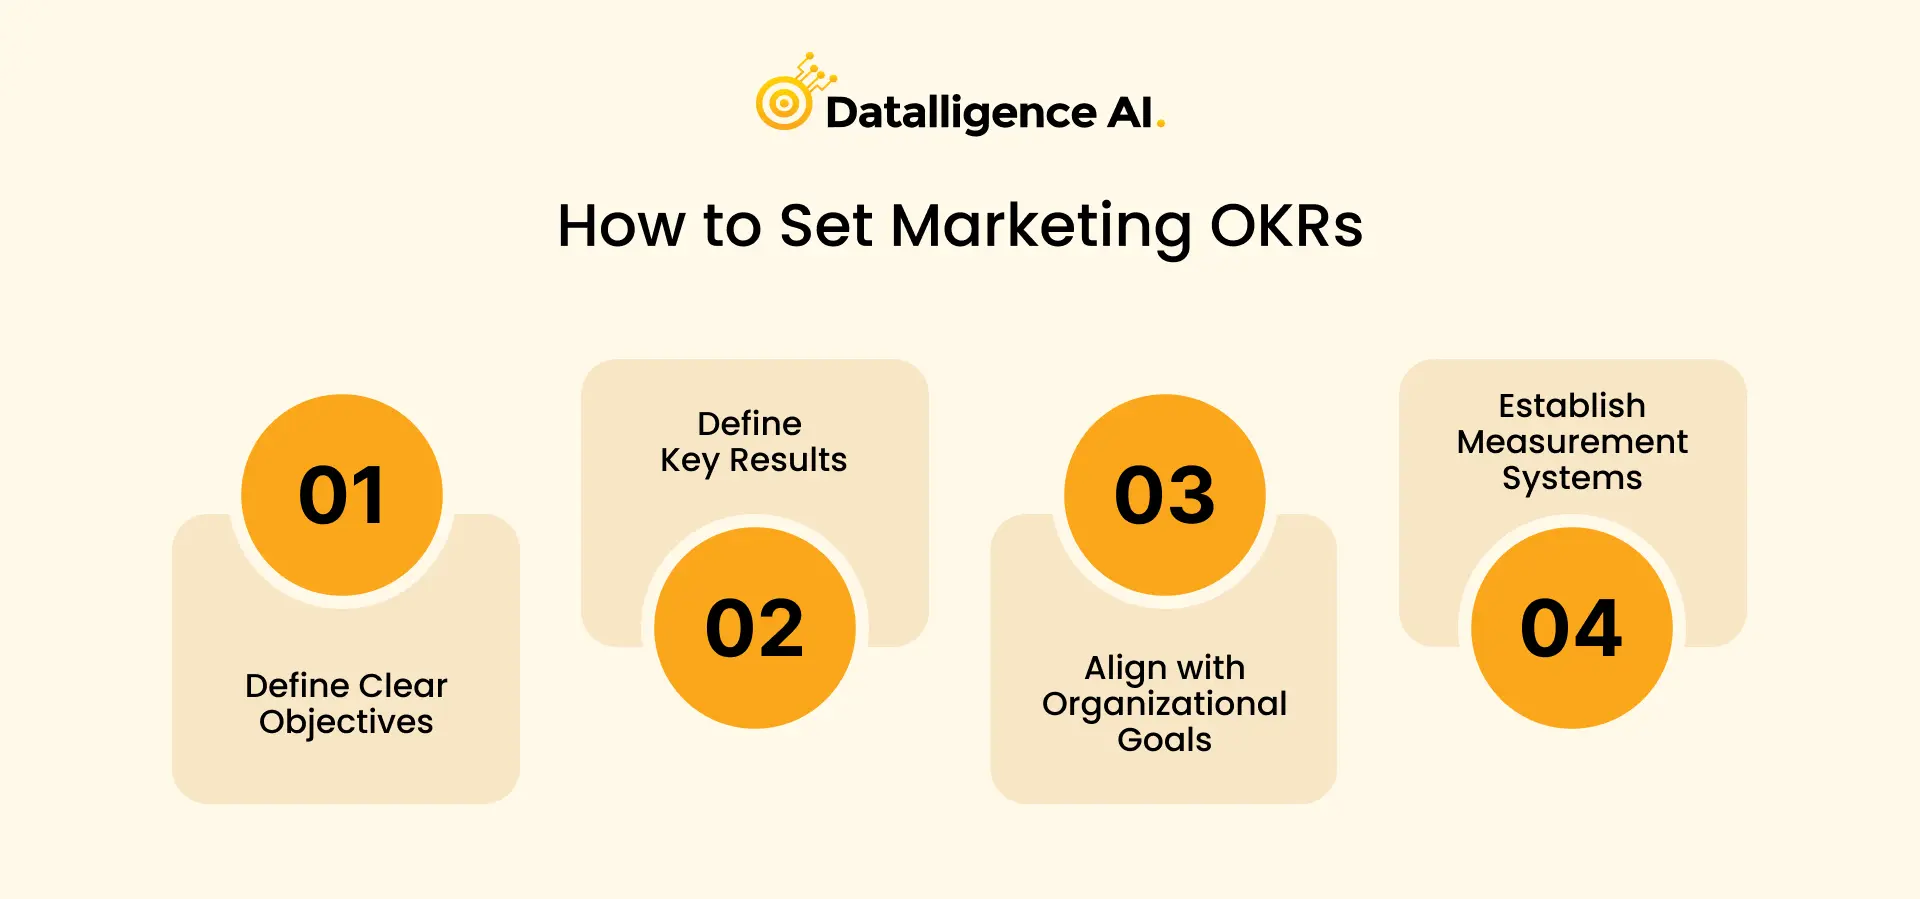 How to Set Marketing OKRs